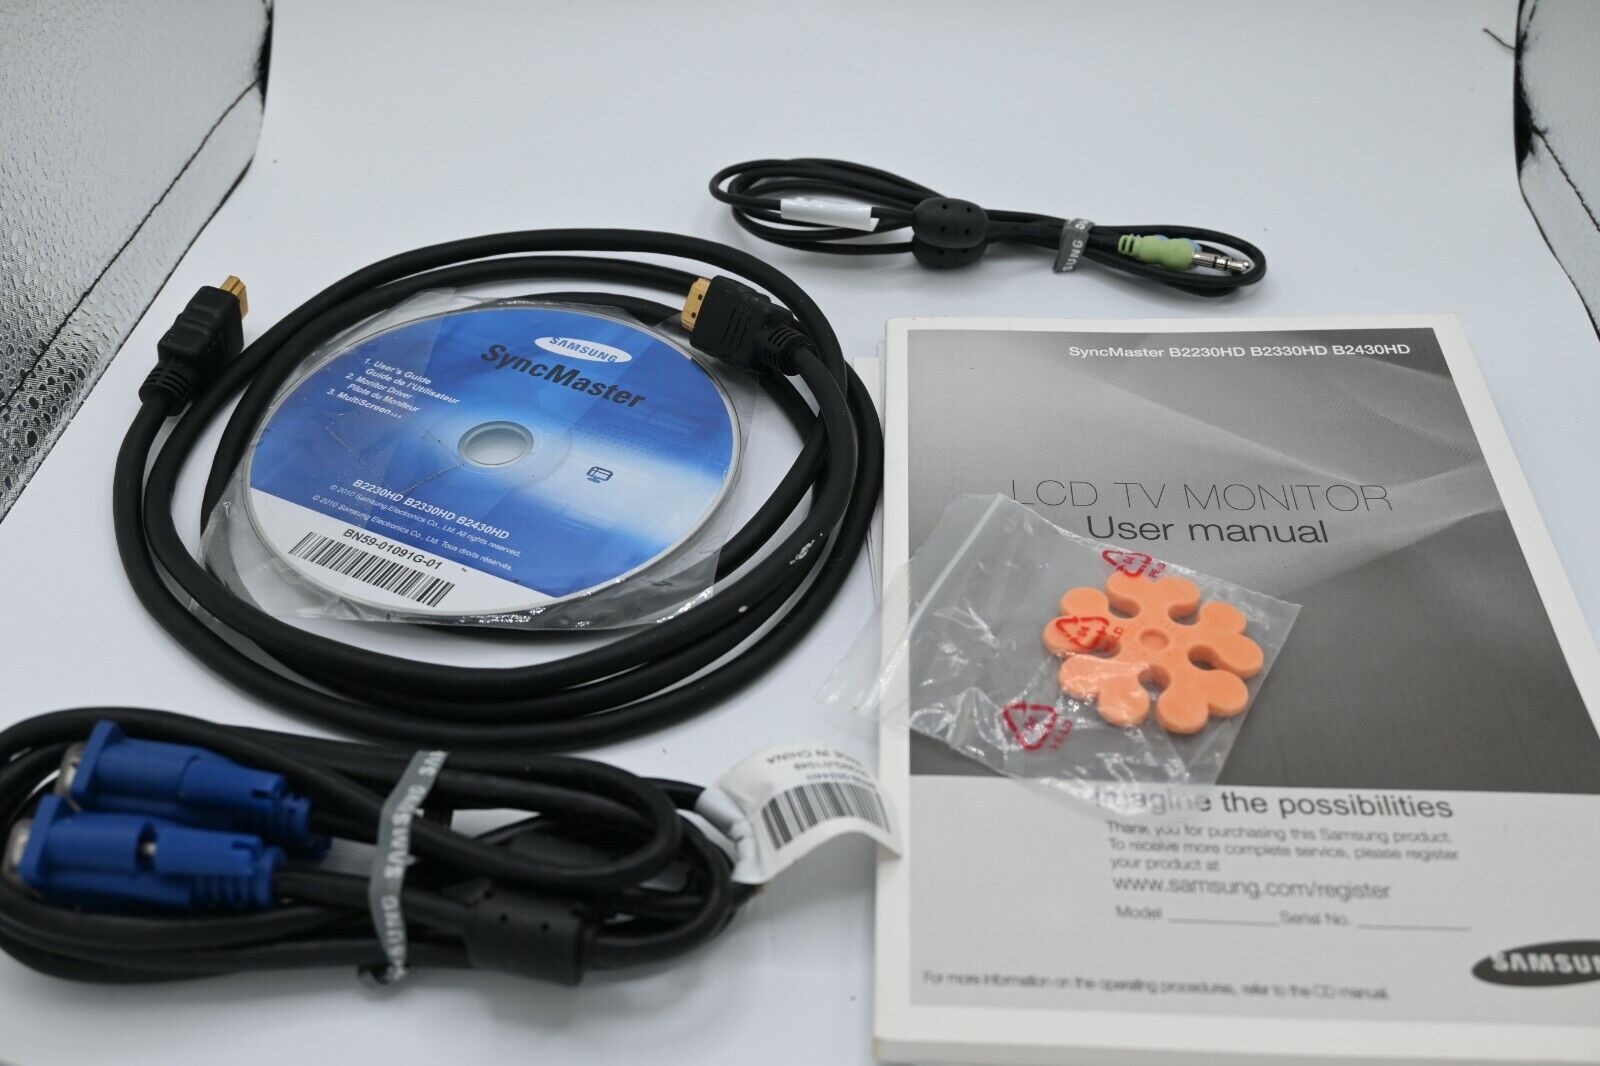 Samsung SyncMaster B2230HD B2330HD B2430HD Driver CD and User Manual HDMI Cable